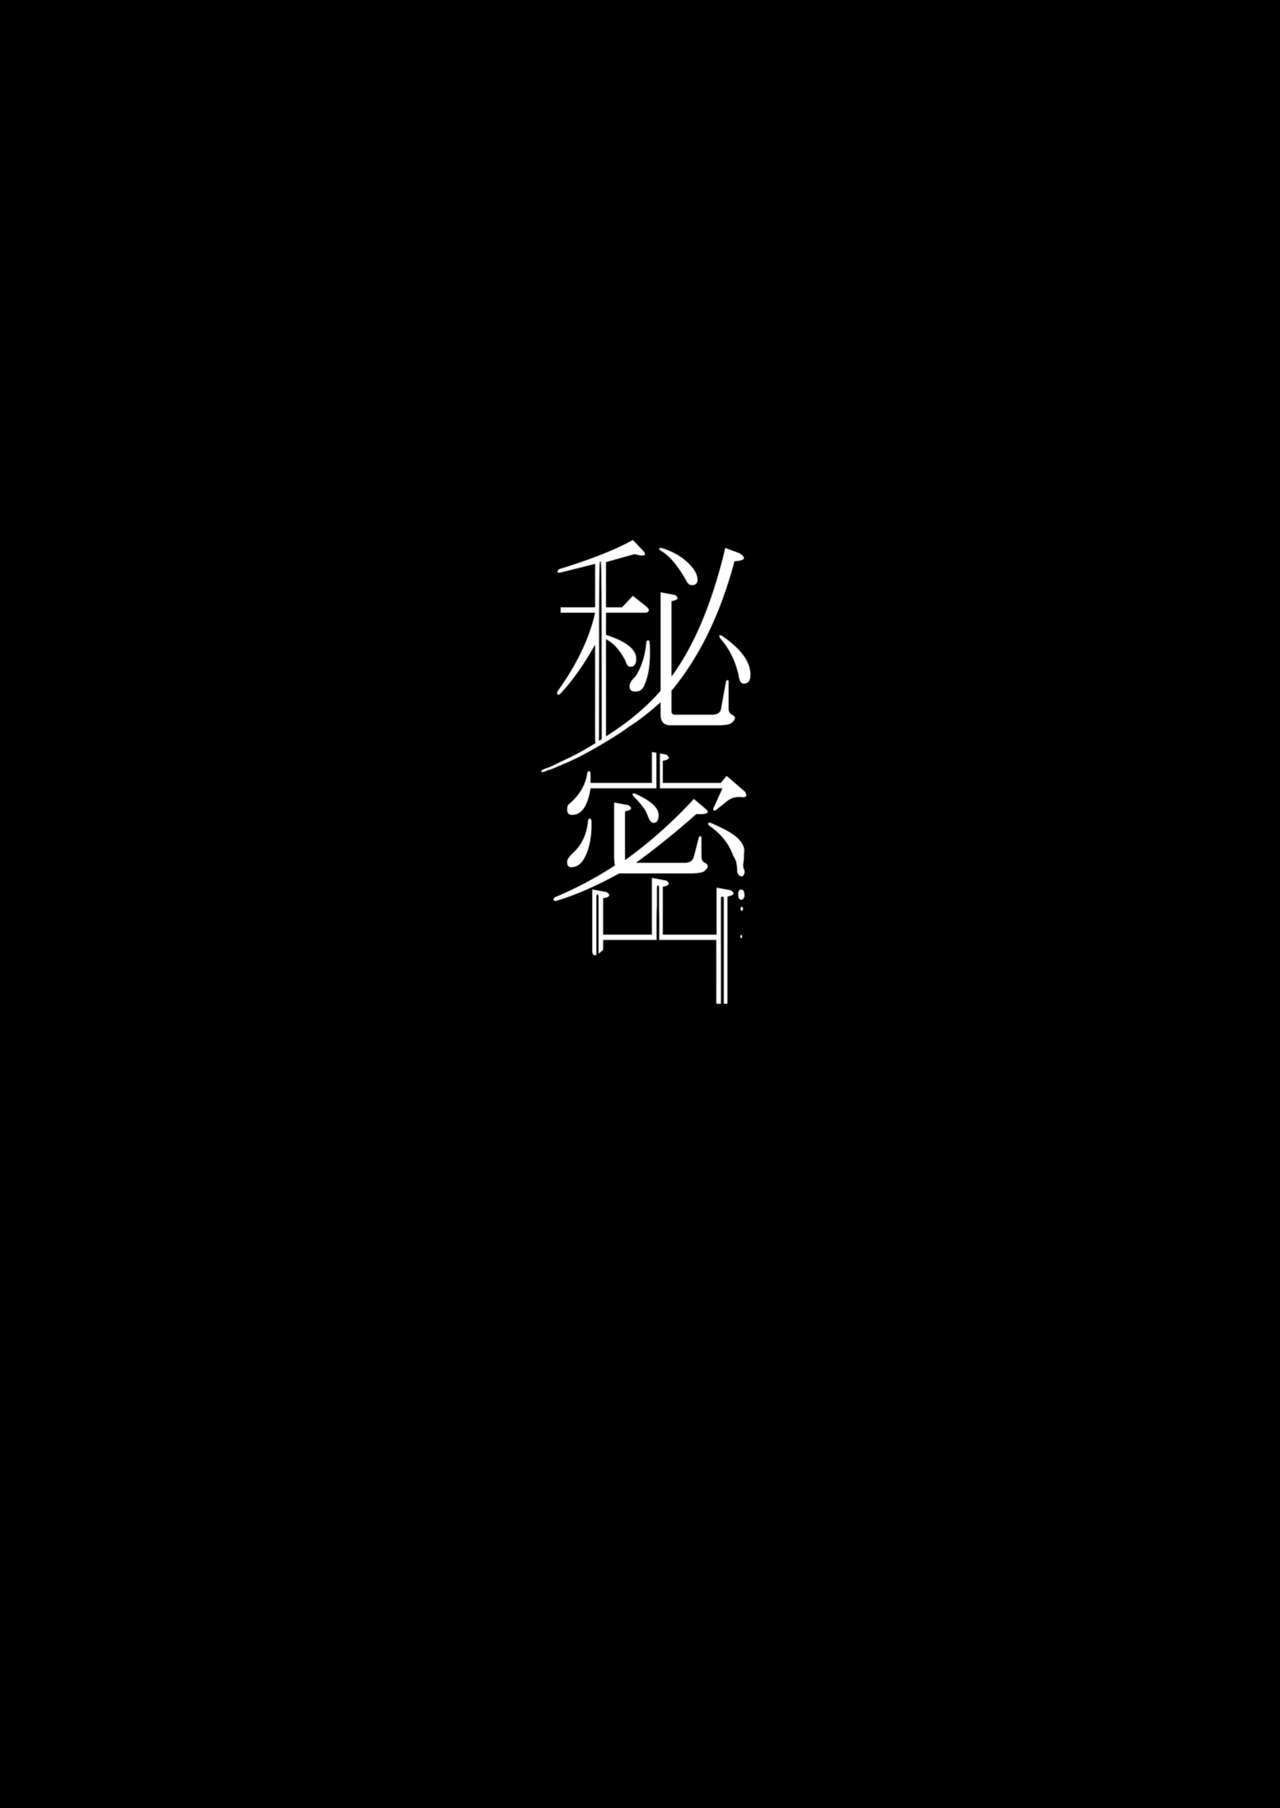 [Ichigo Crown (ゆずりあい)] 秘密 総集編 ～母娘快楽堕ち～ [DL版]